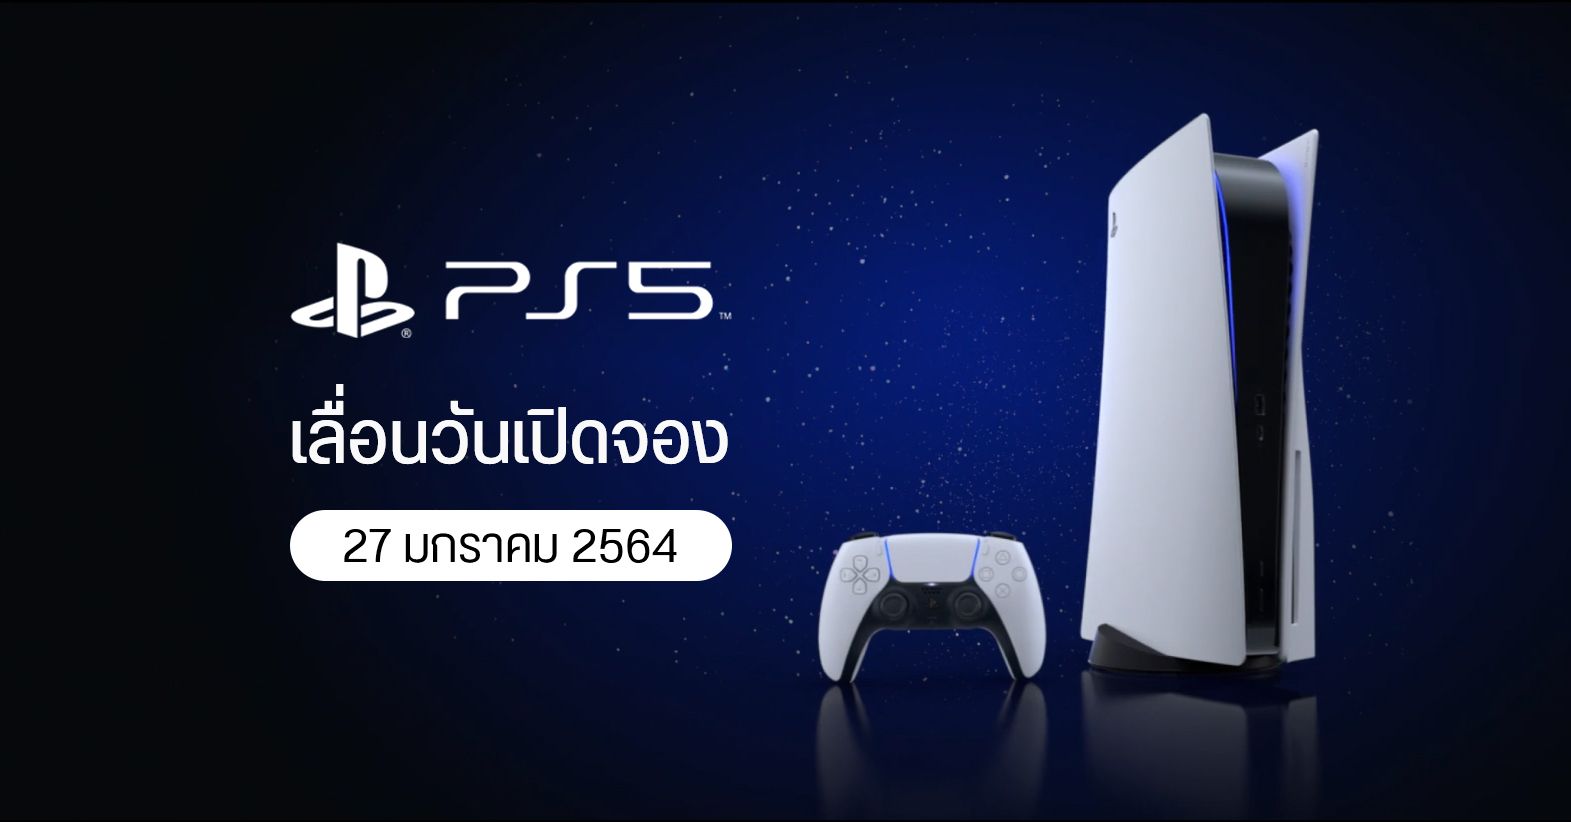 Sony Store Online เลื่อนวันสั่งจอง PS5 เป็นวันที่ 27 มกราคม 2564